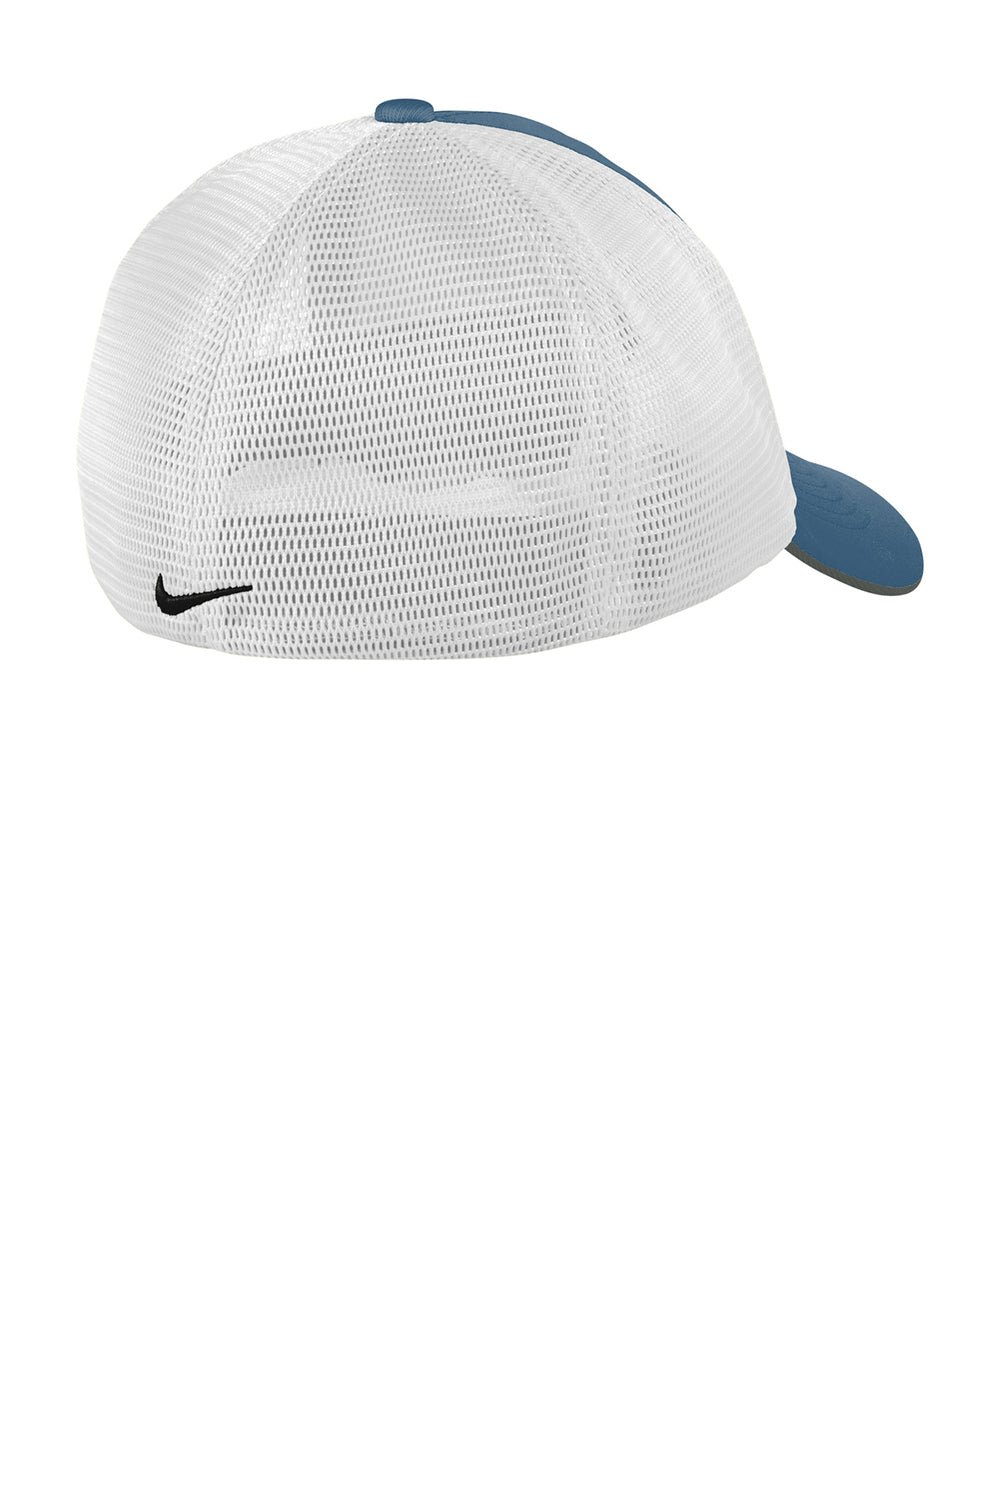 Nike NKAO9293/NKFB6448 Mens Dri-Fit Moisture Wicking Stretch Fit Hat Navy Blue/White Flat Back